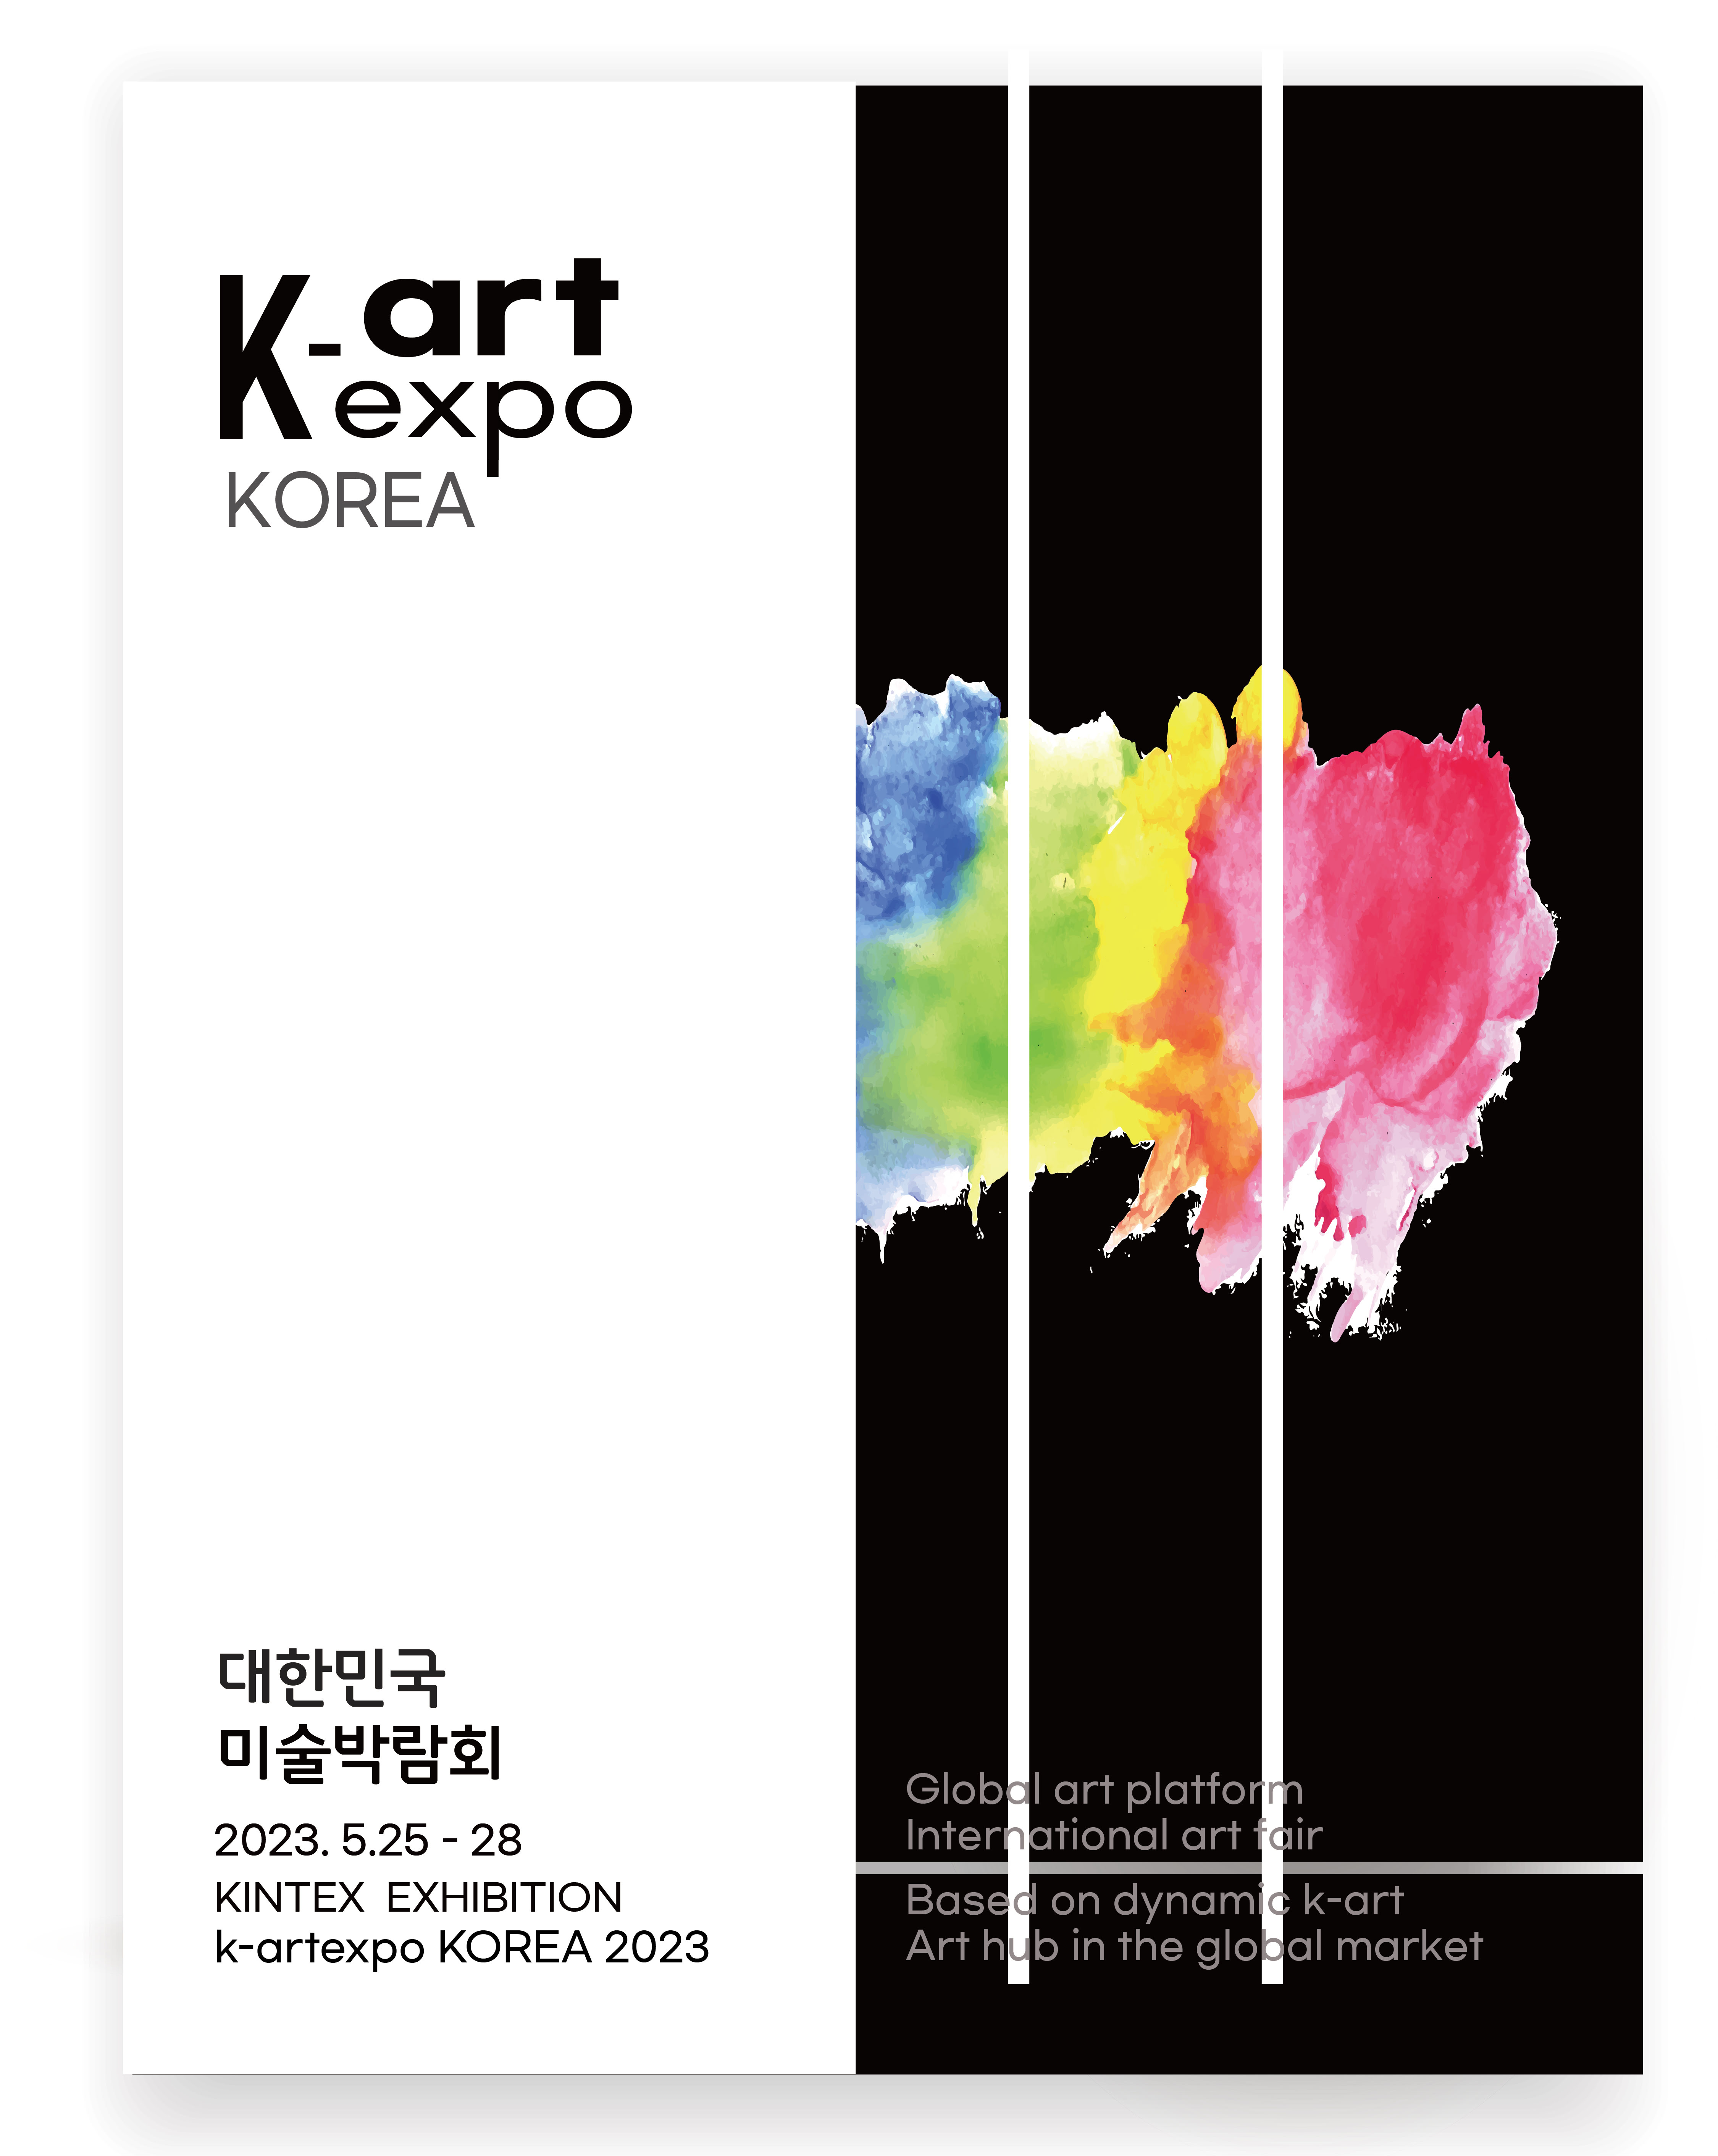 K-art expo KOREA 대한민국 미술박람회 2023.5.25 -28 KINTEX EXHIBITION k-artexpo KOREA 2023 Global art platform International art fair Based on dynamic k-art Art hub in the global market